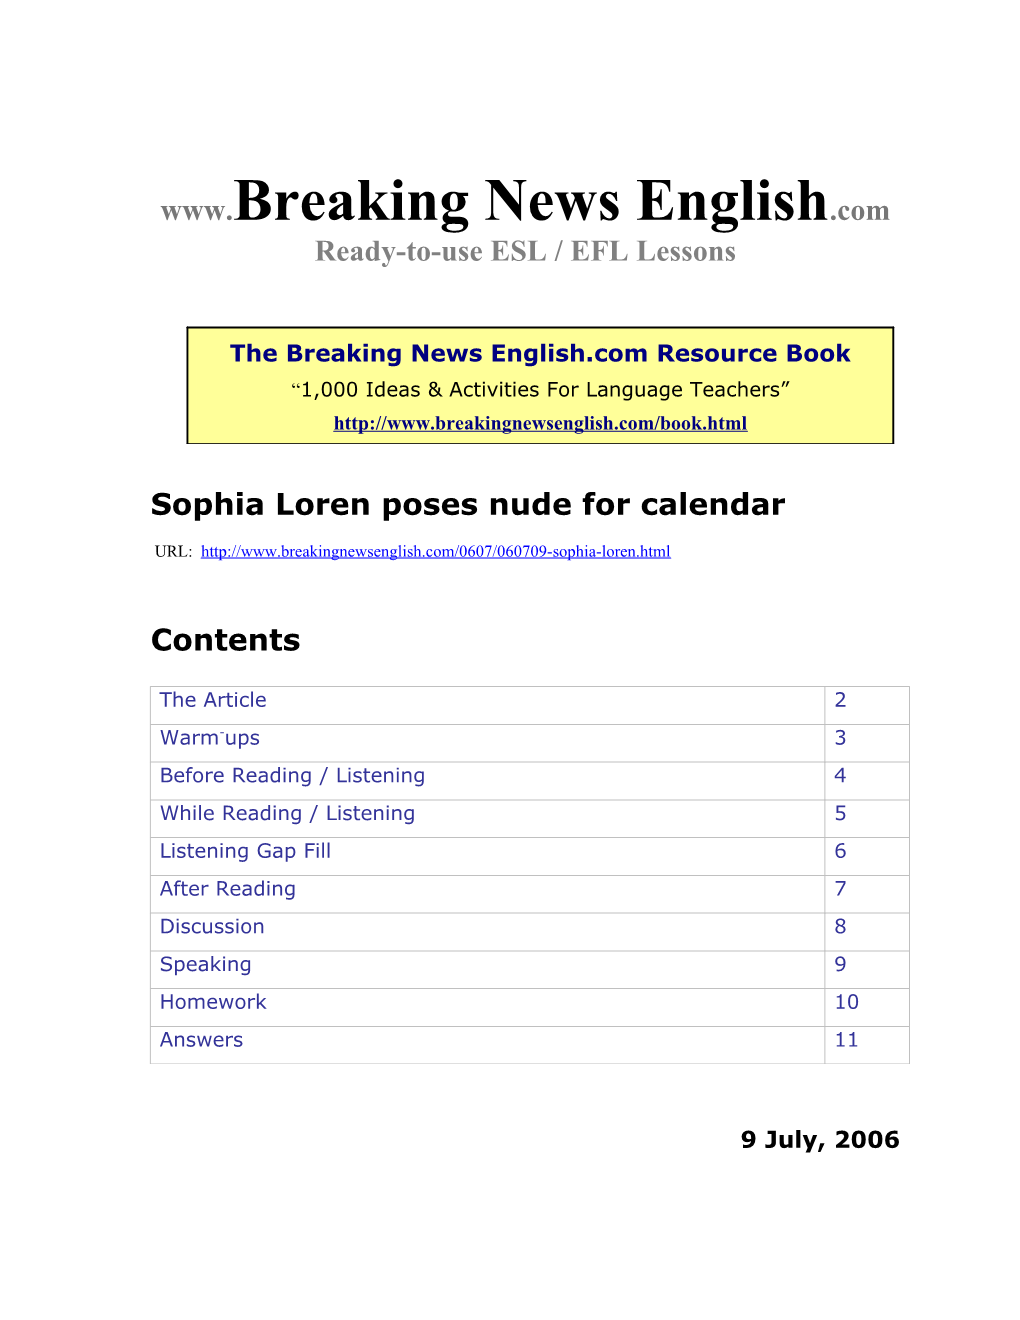 Sophia Loren Poses Nude For Calendar